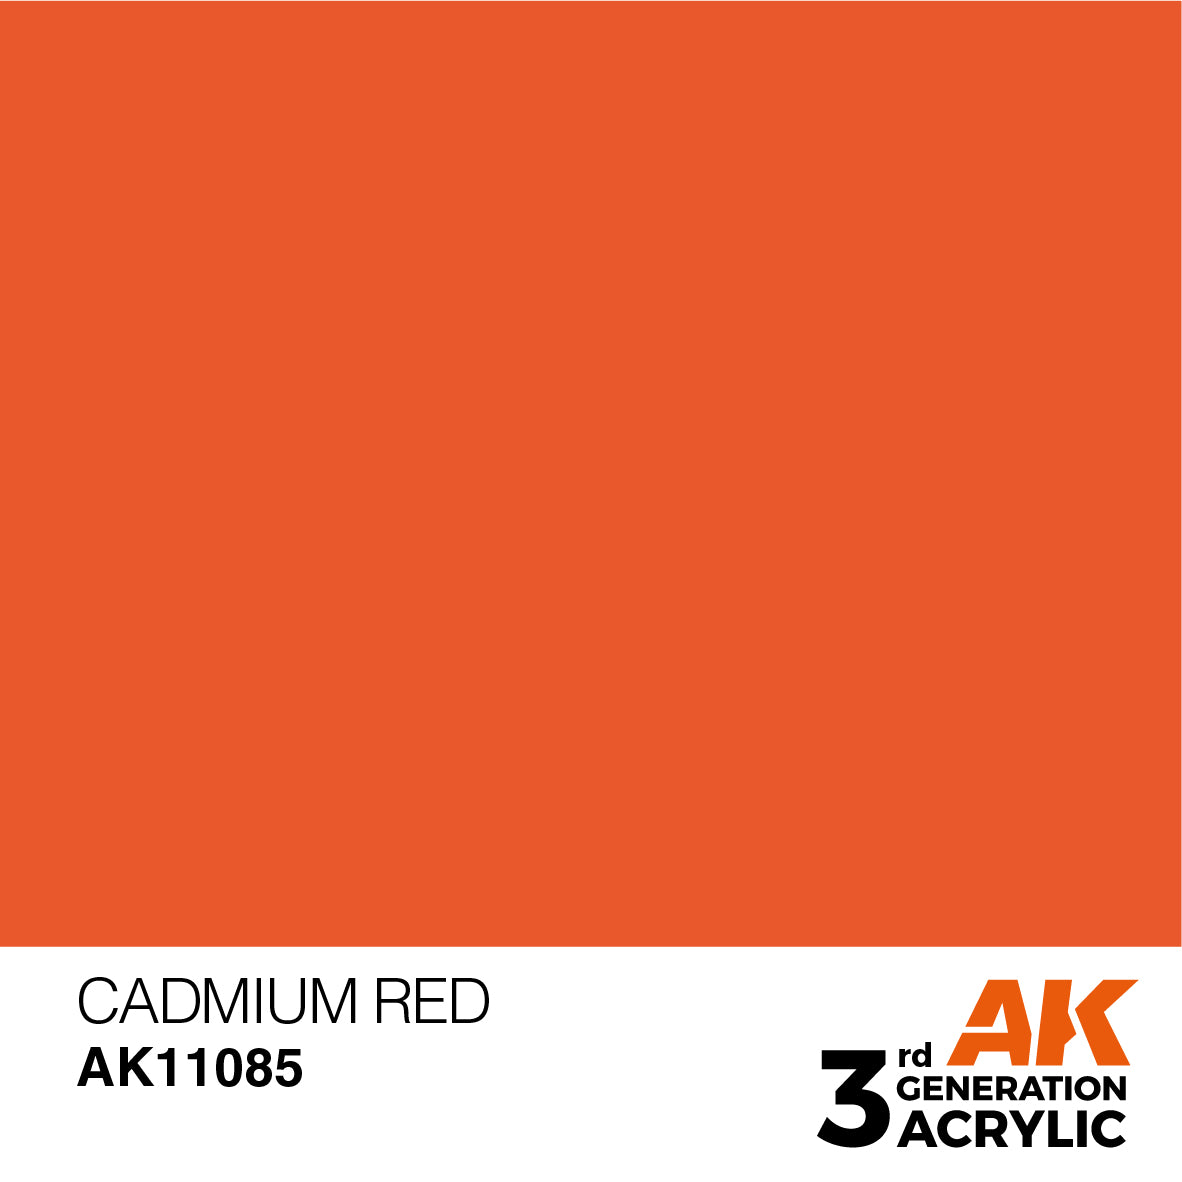 Cadmium Red 3G Acrylic Paint 17ml Bottle